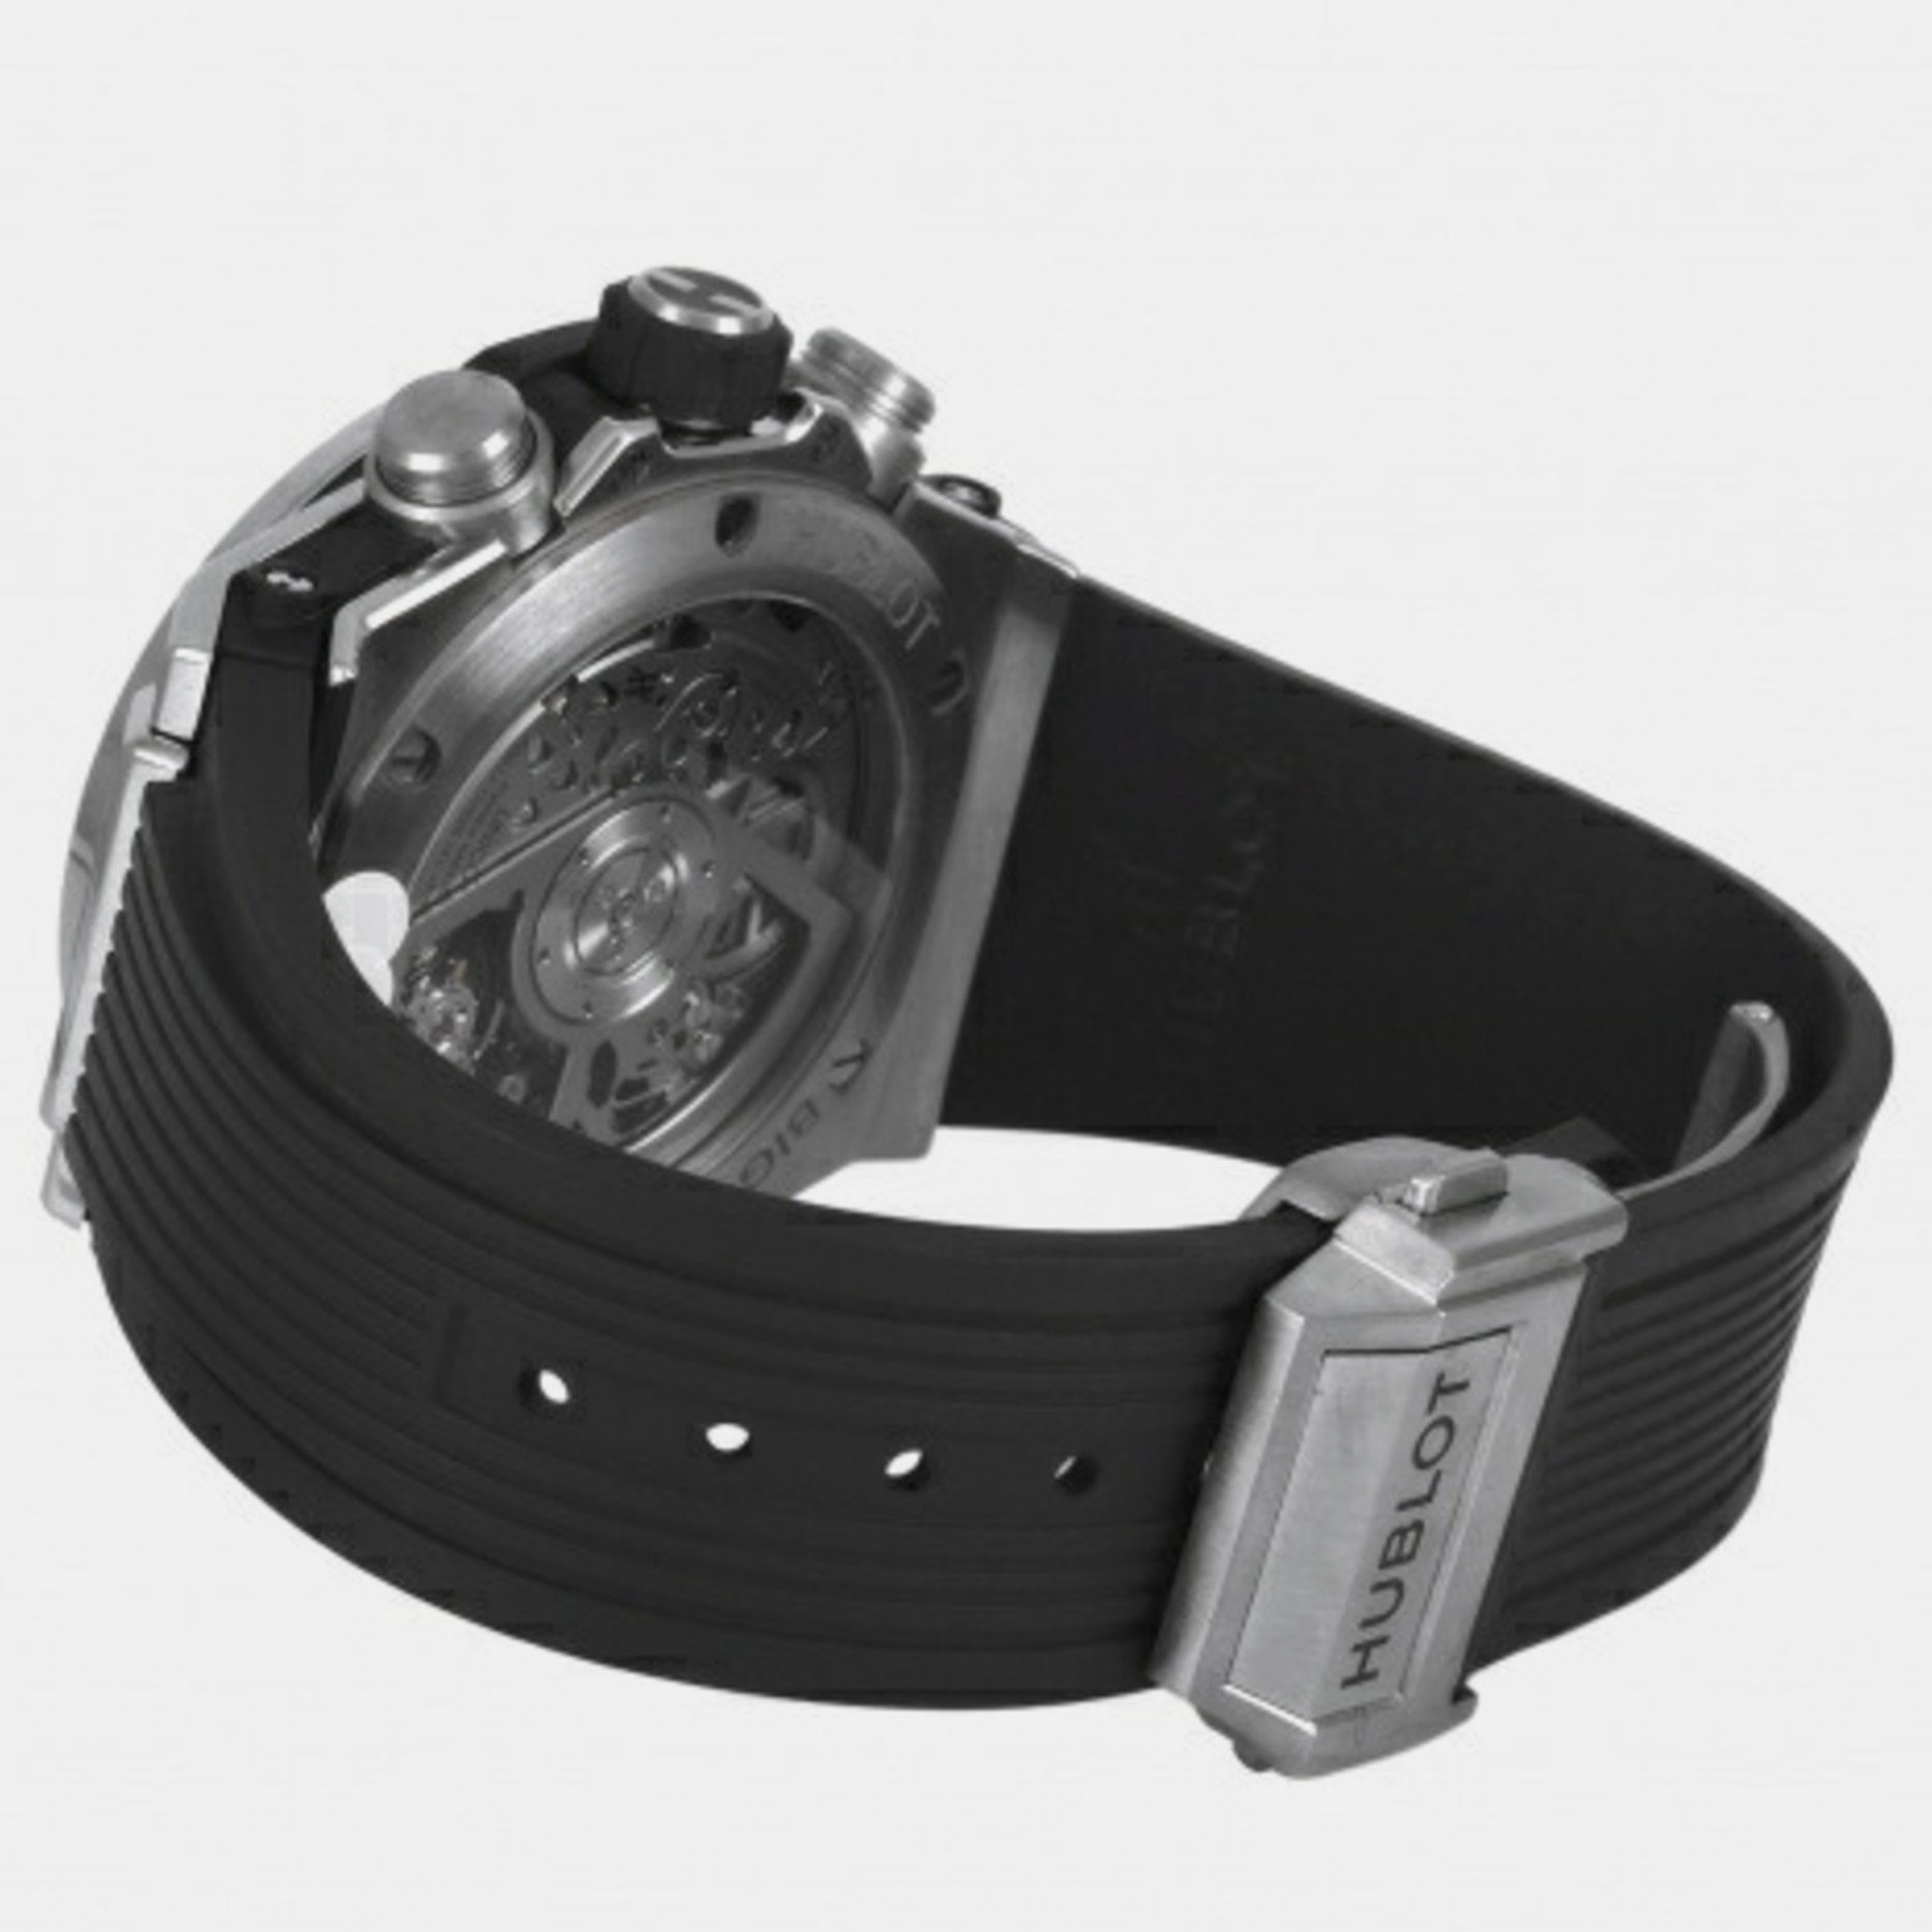 Hublot Grey Diamond Titanium Big Bang 441.NX.1170.RX.1104 Automatic Men's Wristwatch 42 Mm